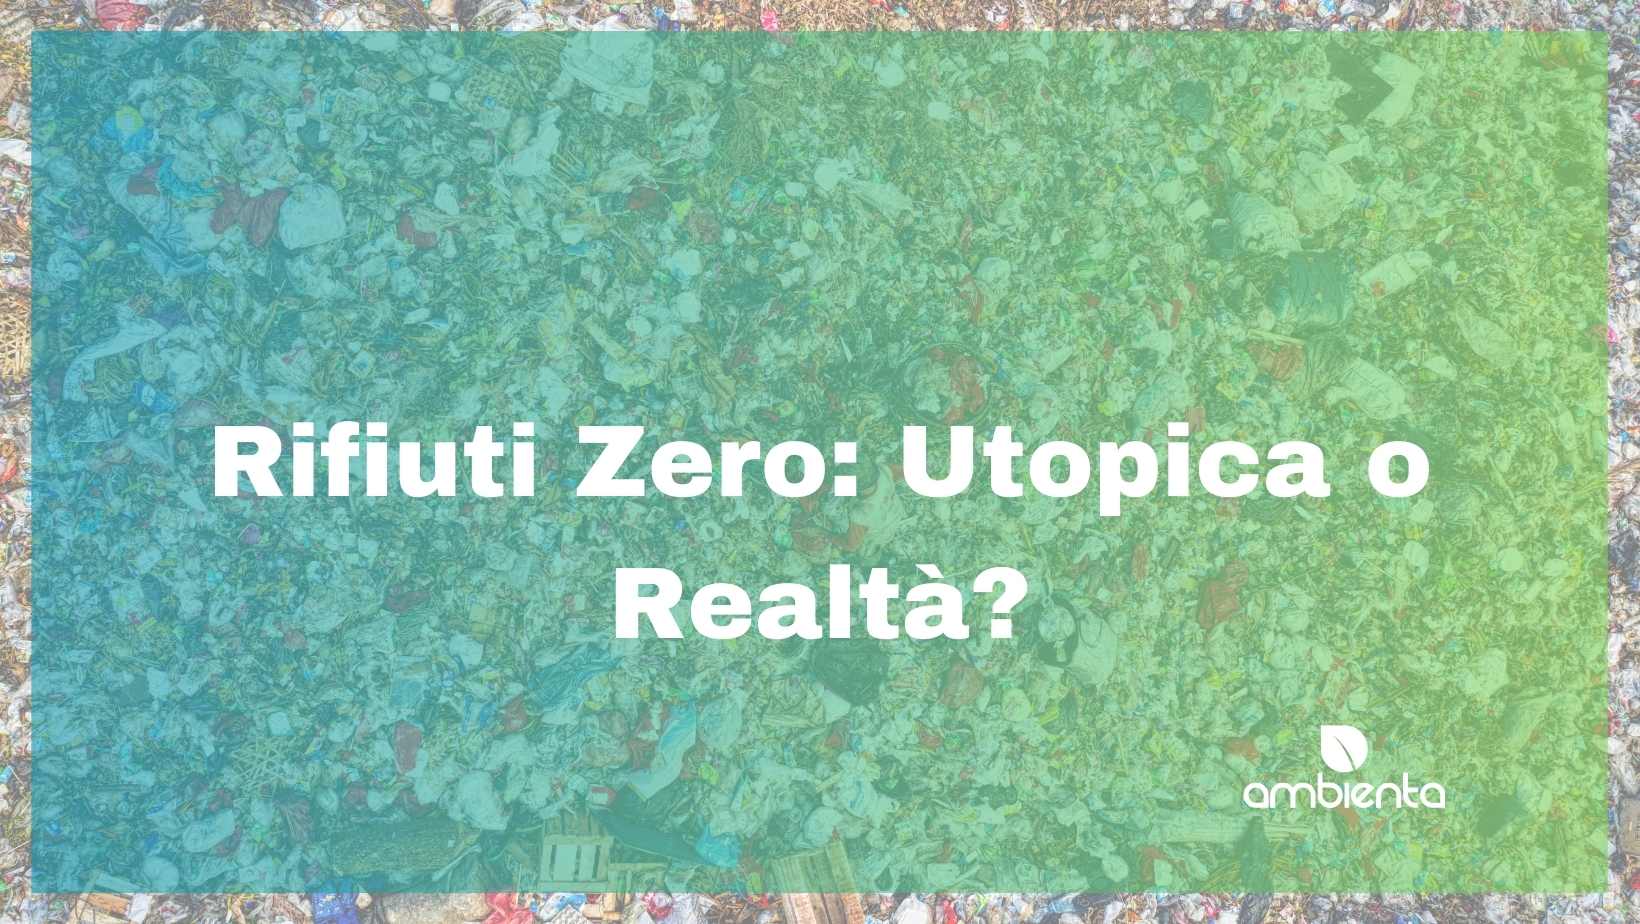 Rifiuti Zero: Utopica o Realtà?